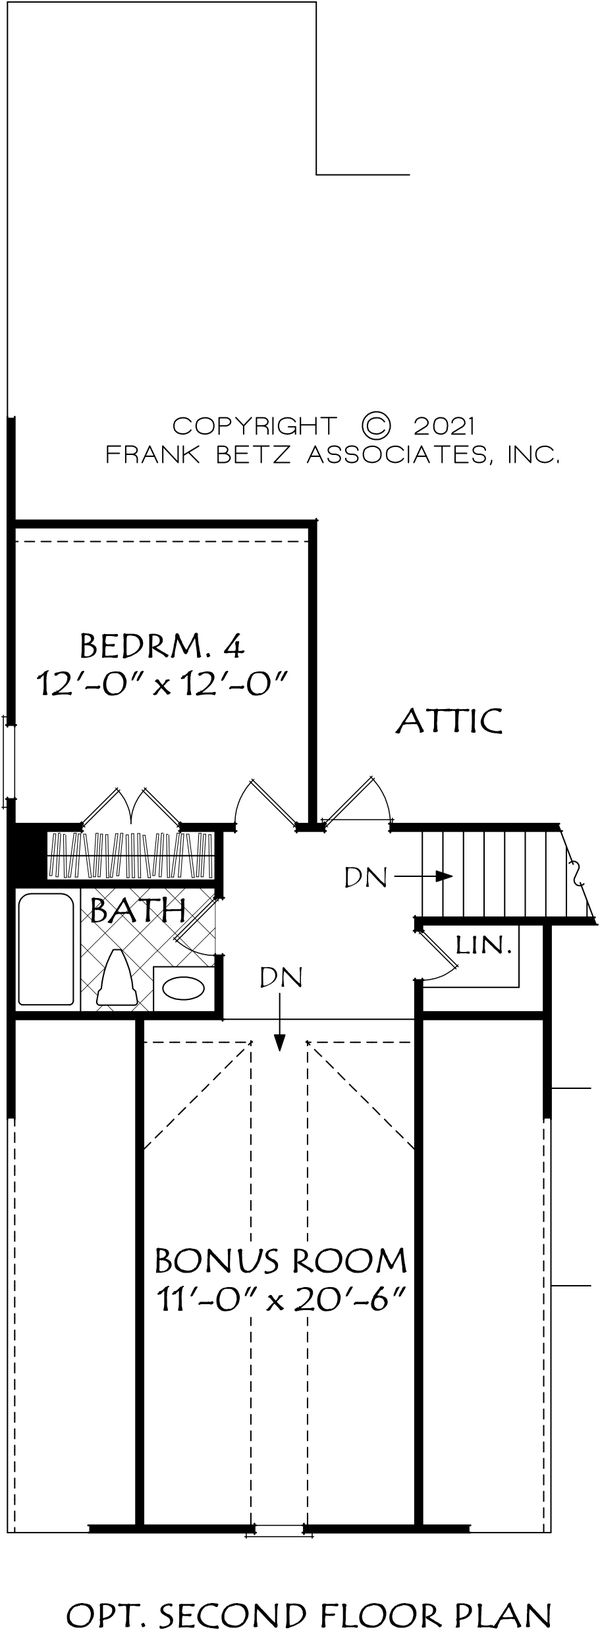 House Blueprint - Optional 2nd Floor